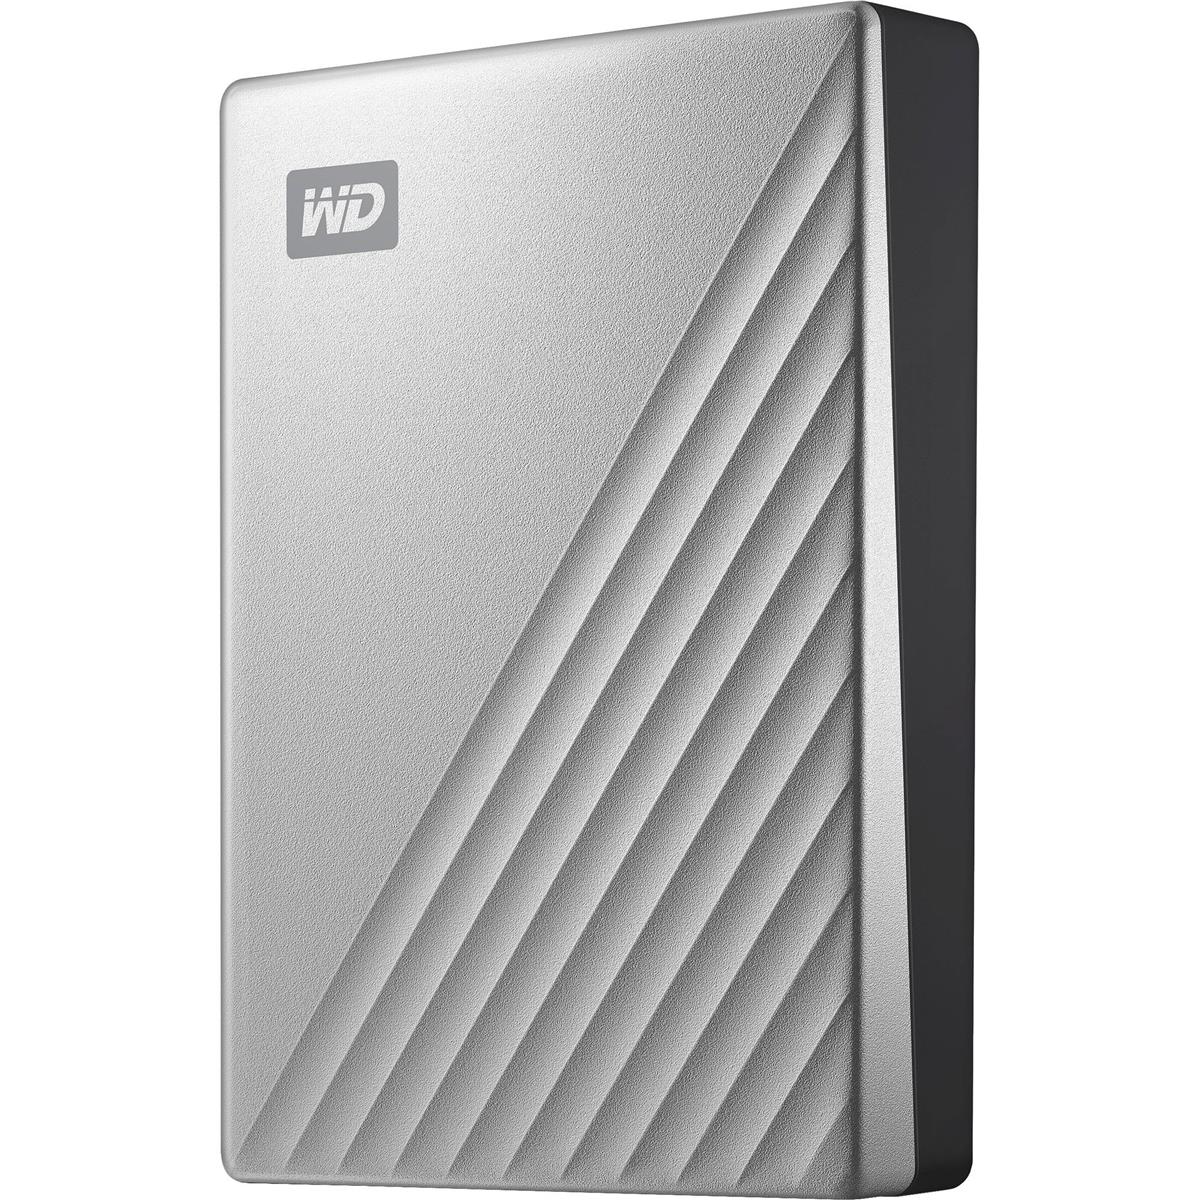 Image of WD My Passport Ultra 4TB USB 3.0 Type-C External Hard Drive for Mac